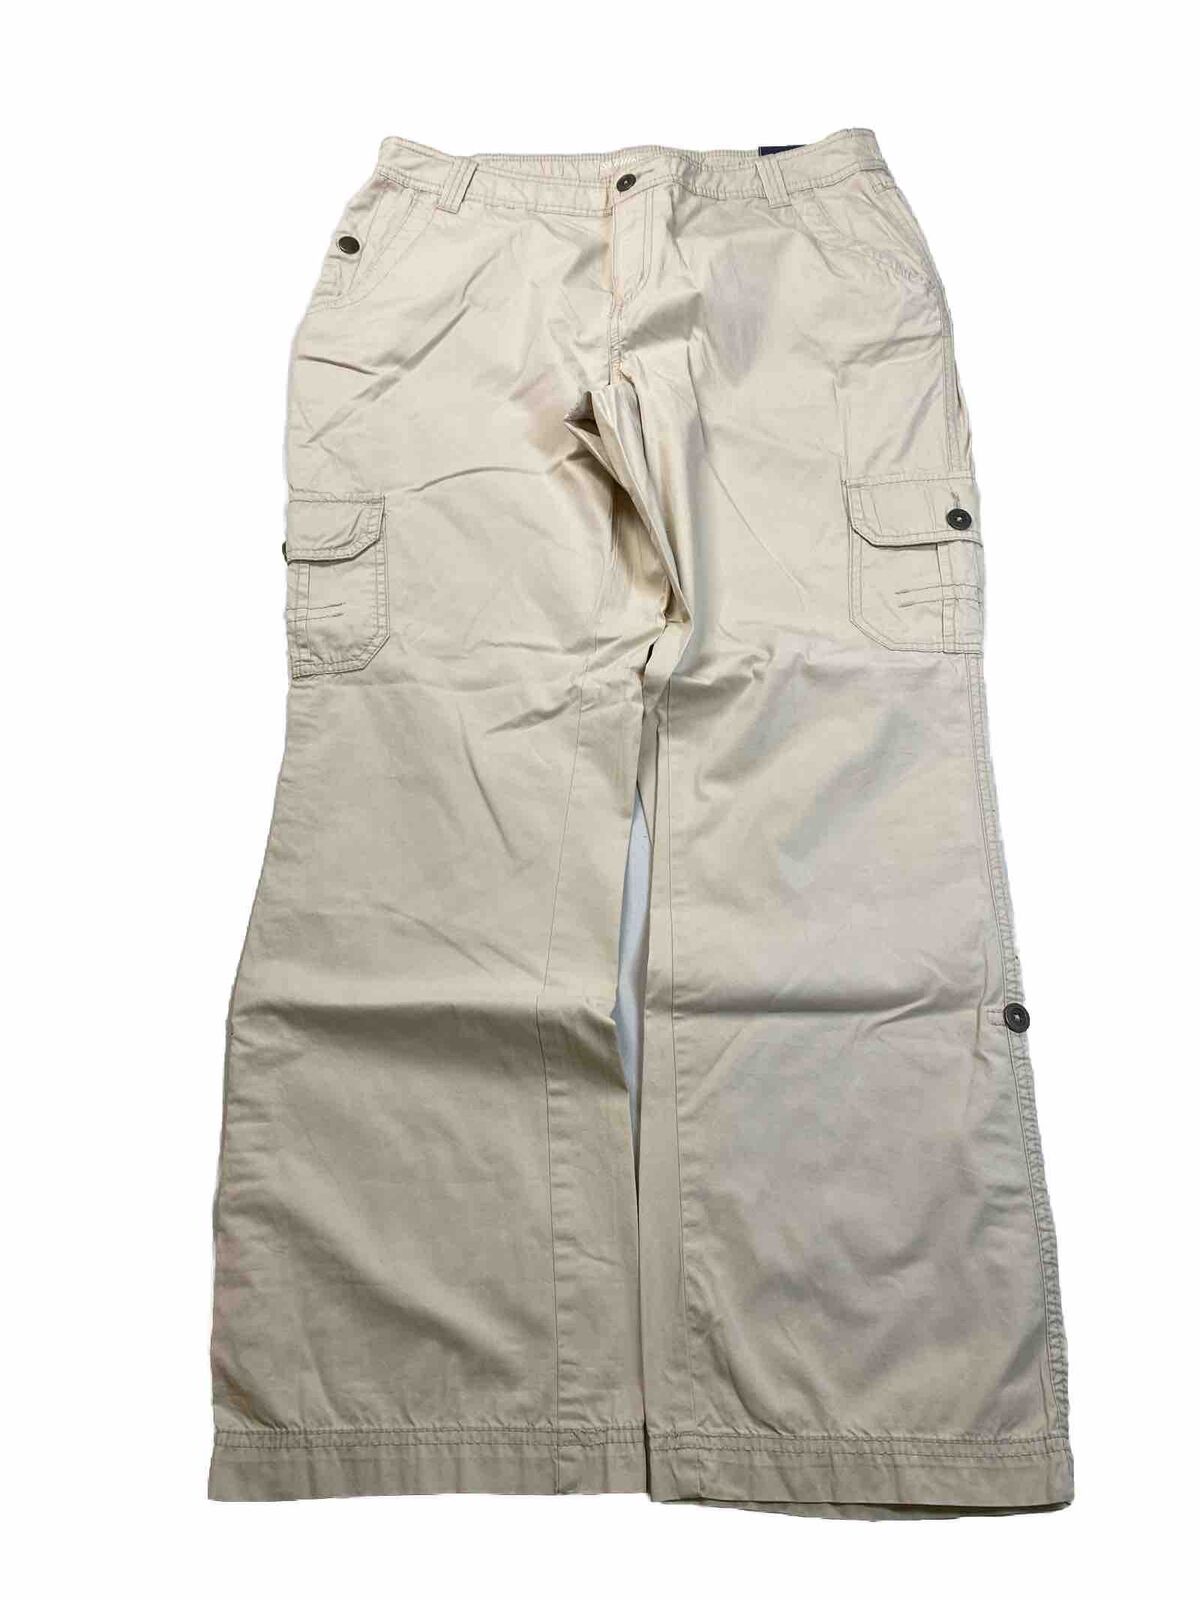 NEW St.Johns Bay Women's Beige/Tan Comfort Waist Cargo Pants - 16